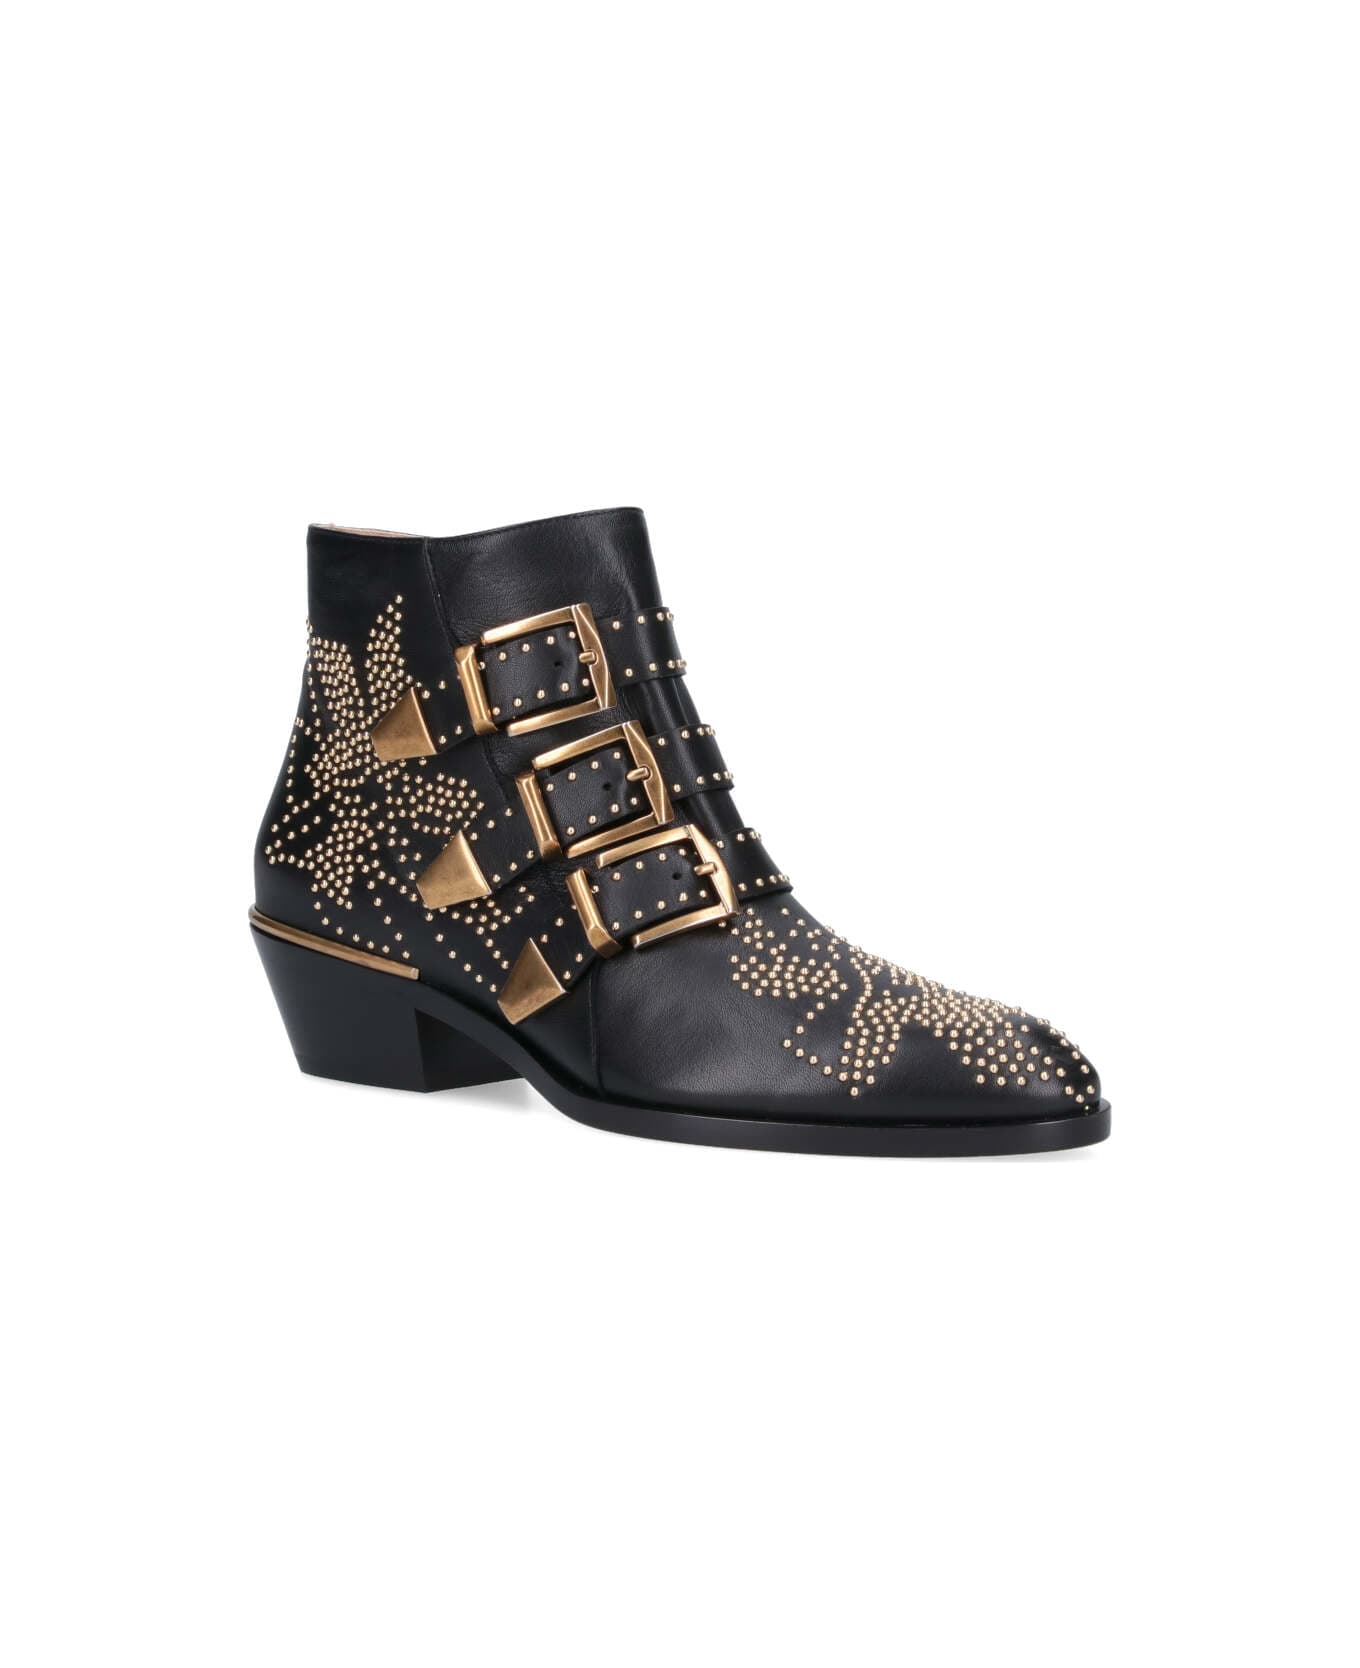 Chloé Susanna Embellished Buckled Boots - Black ブーツ